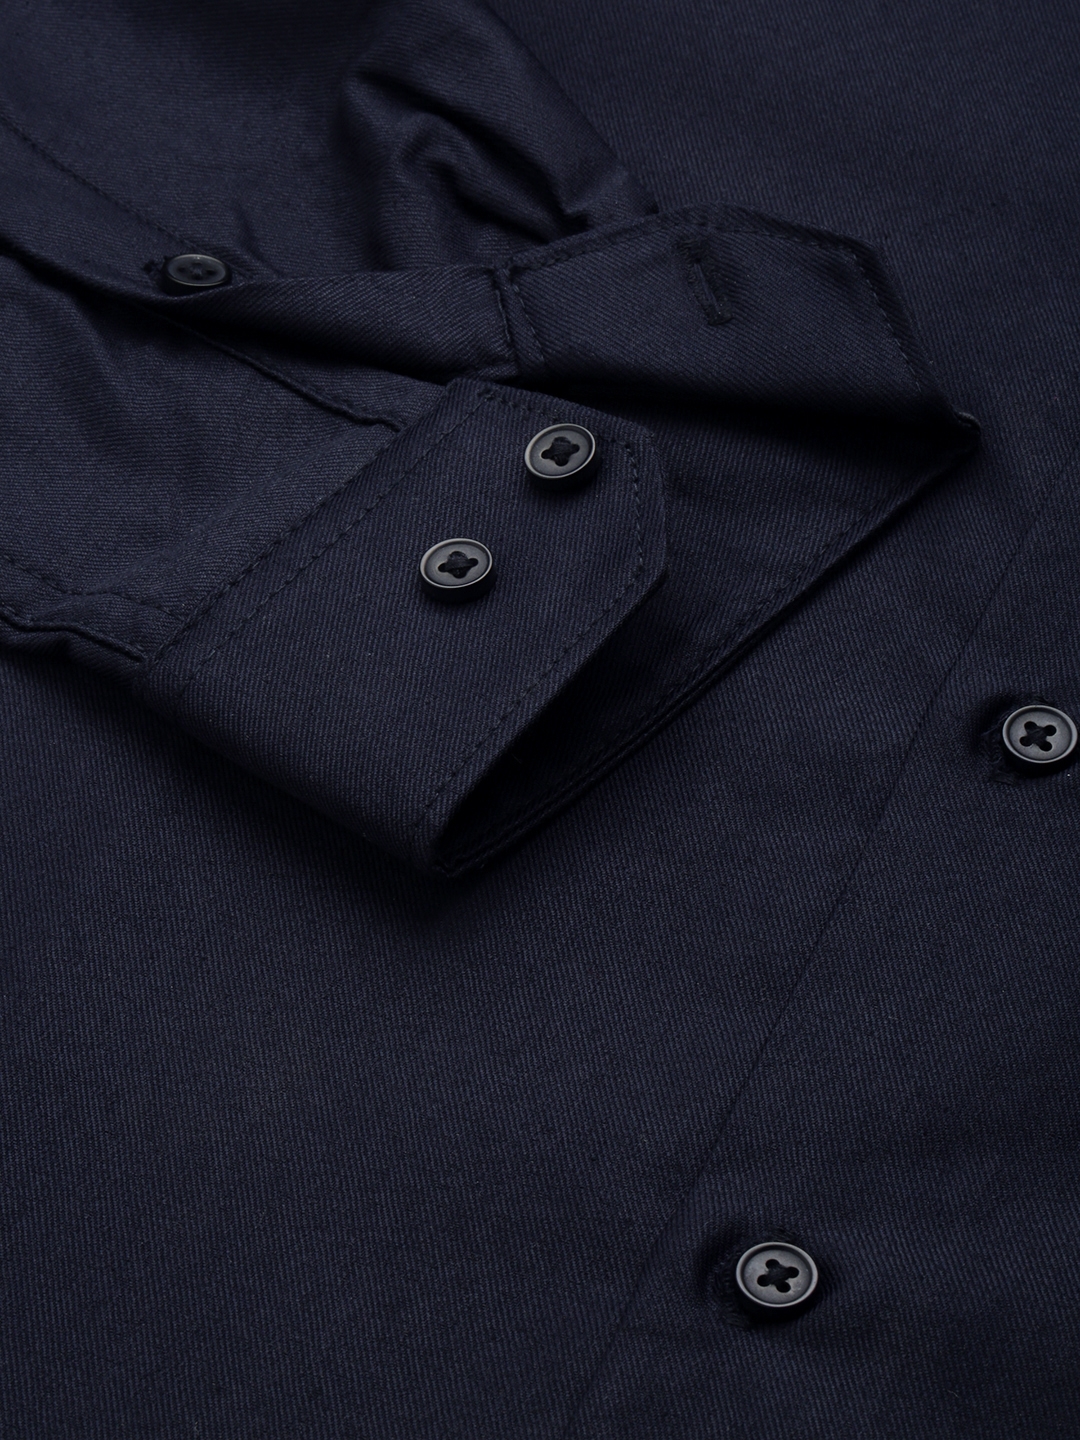 Showoff | SHOWOFF Men's Spread Collar Long Sleeves Solid Navy Blue Shirt 6